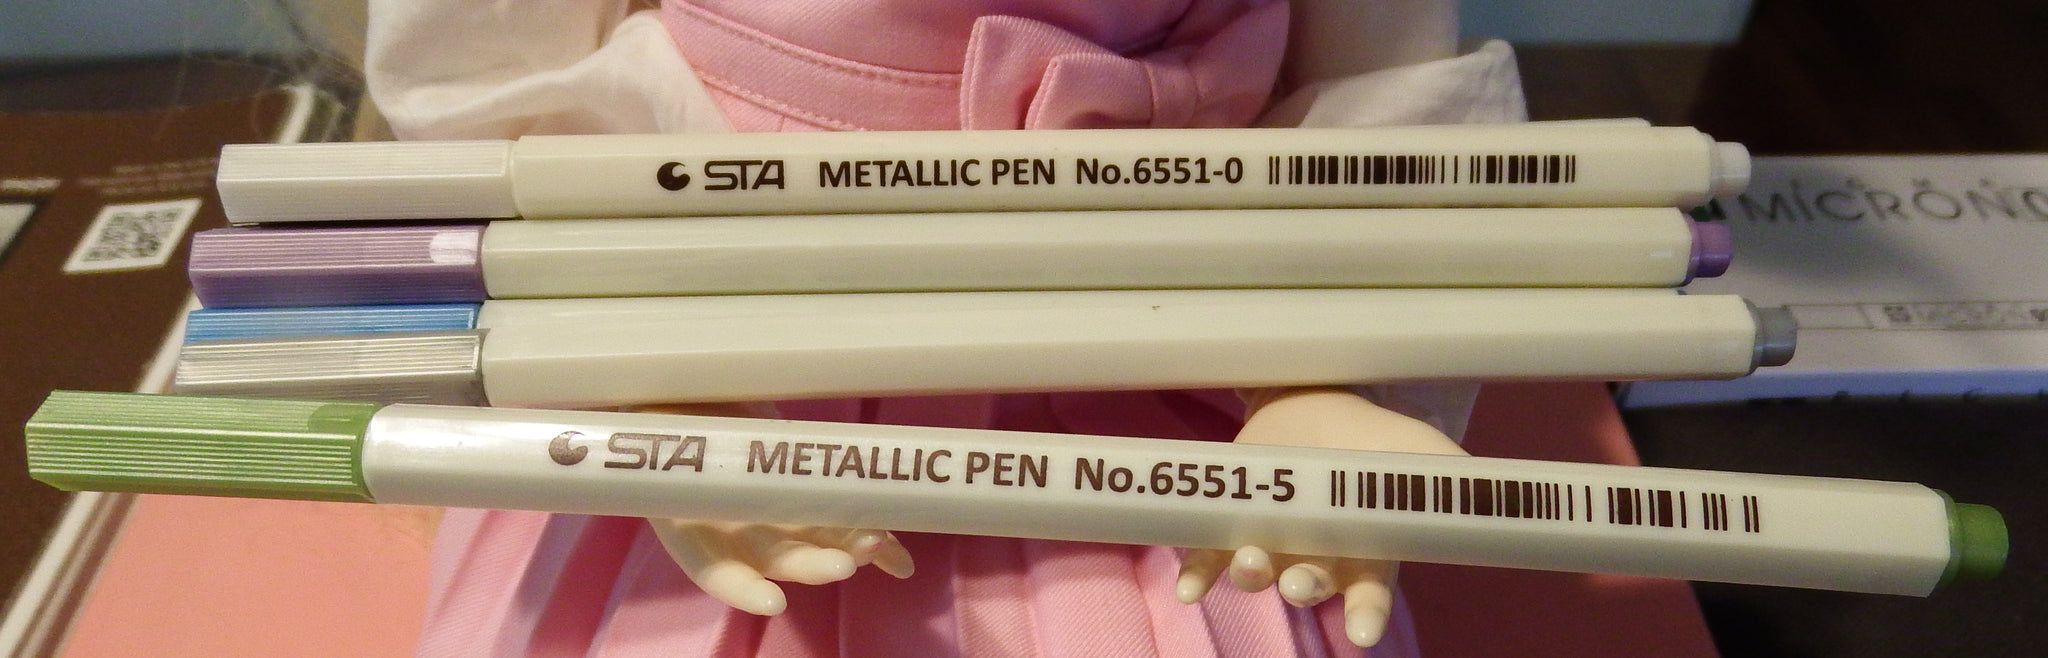 artsy sister,markers,metallic pens